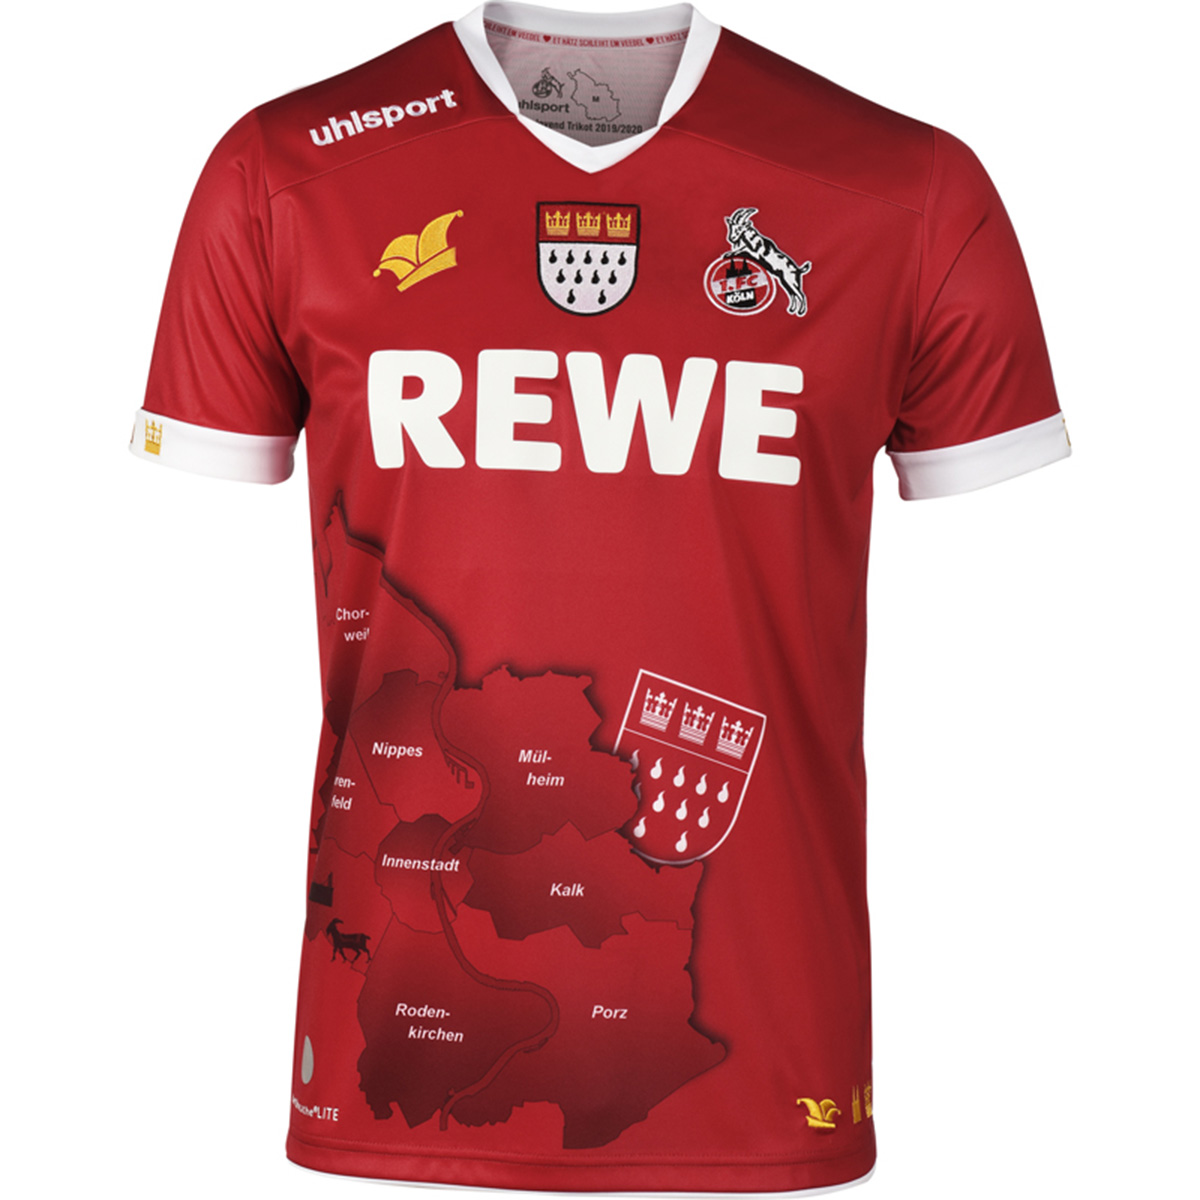 Uhlsport 1.FC Köln Karneval Fastelovend Trikot Shirt 2019/2020